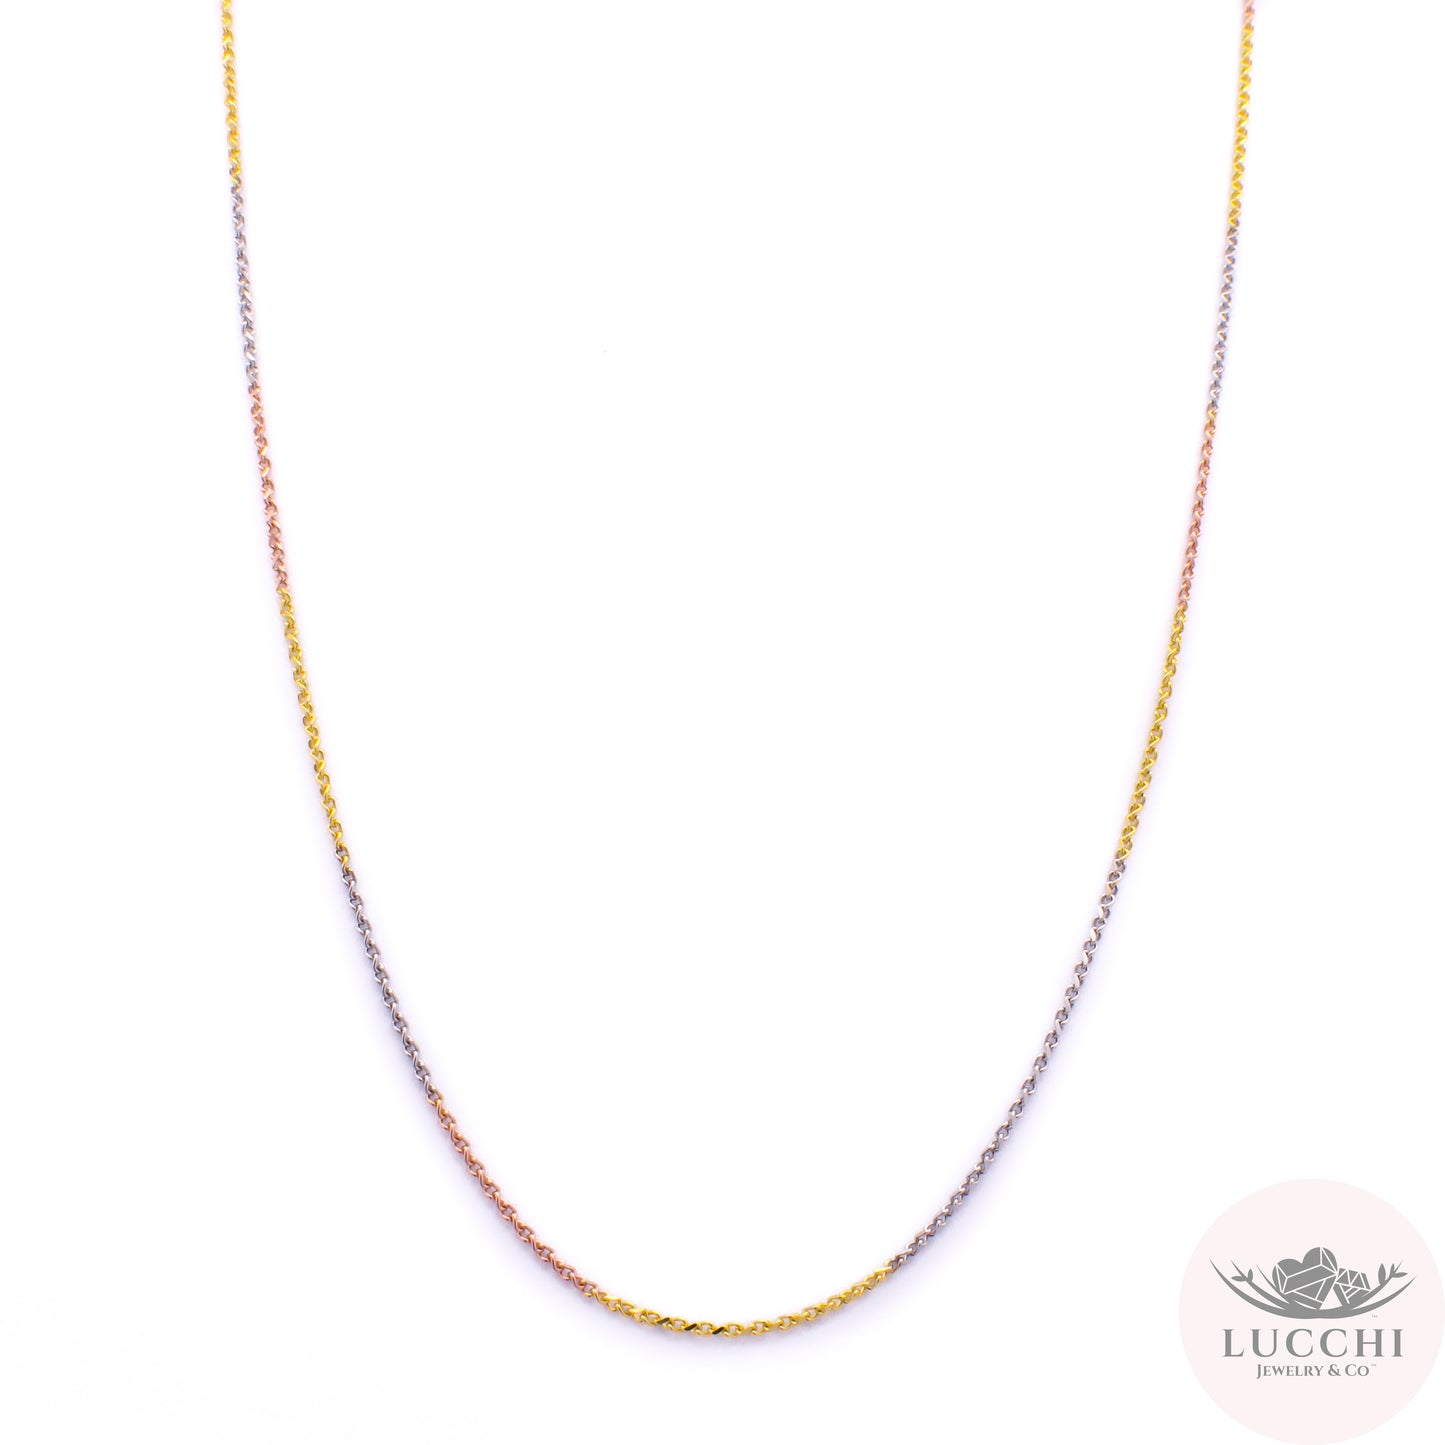 16" Twist Link Tri Gold Rainbow Chain Necklace - 1mm - 14k